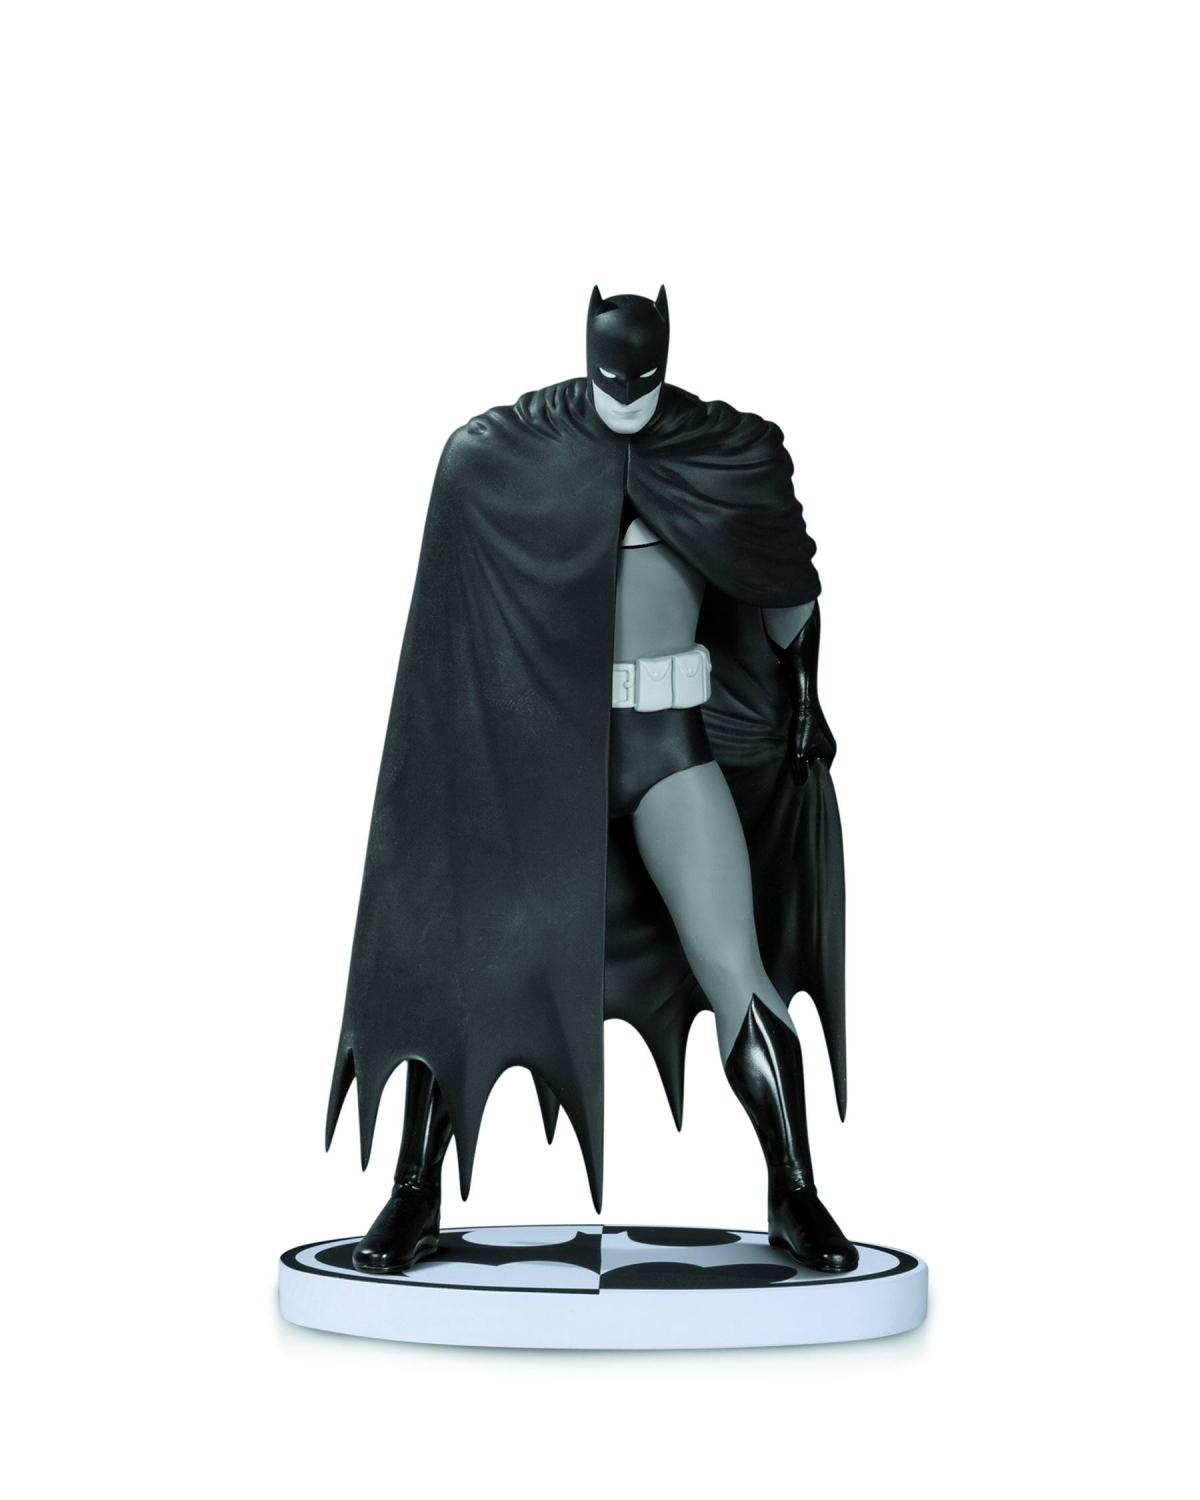 Batman Black & White Dave Mazzucchelli 2nd Edition Statue